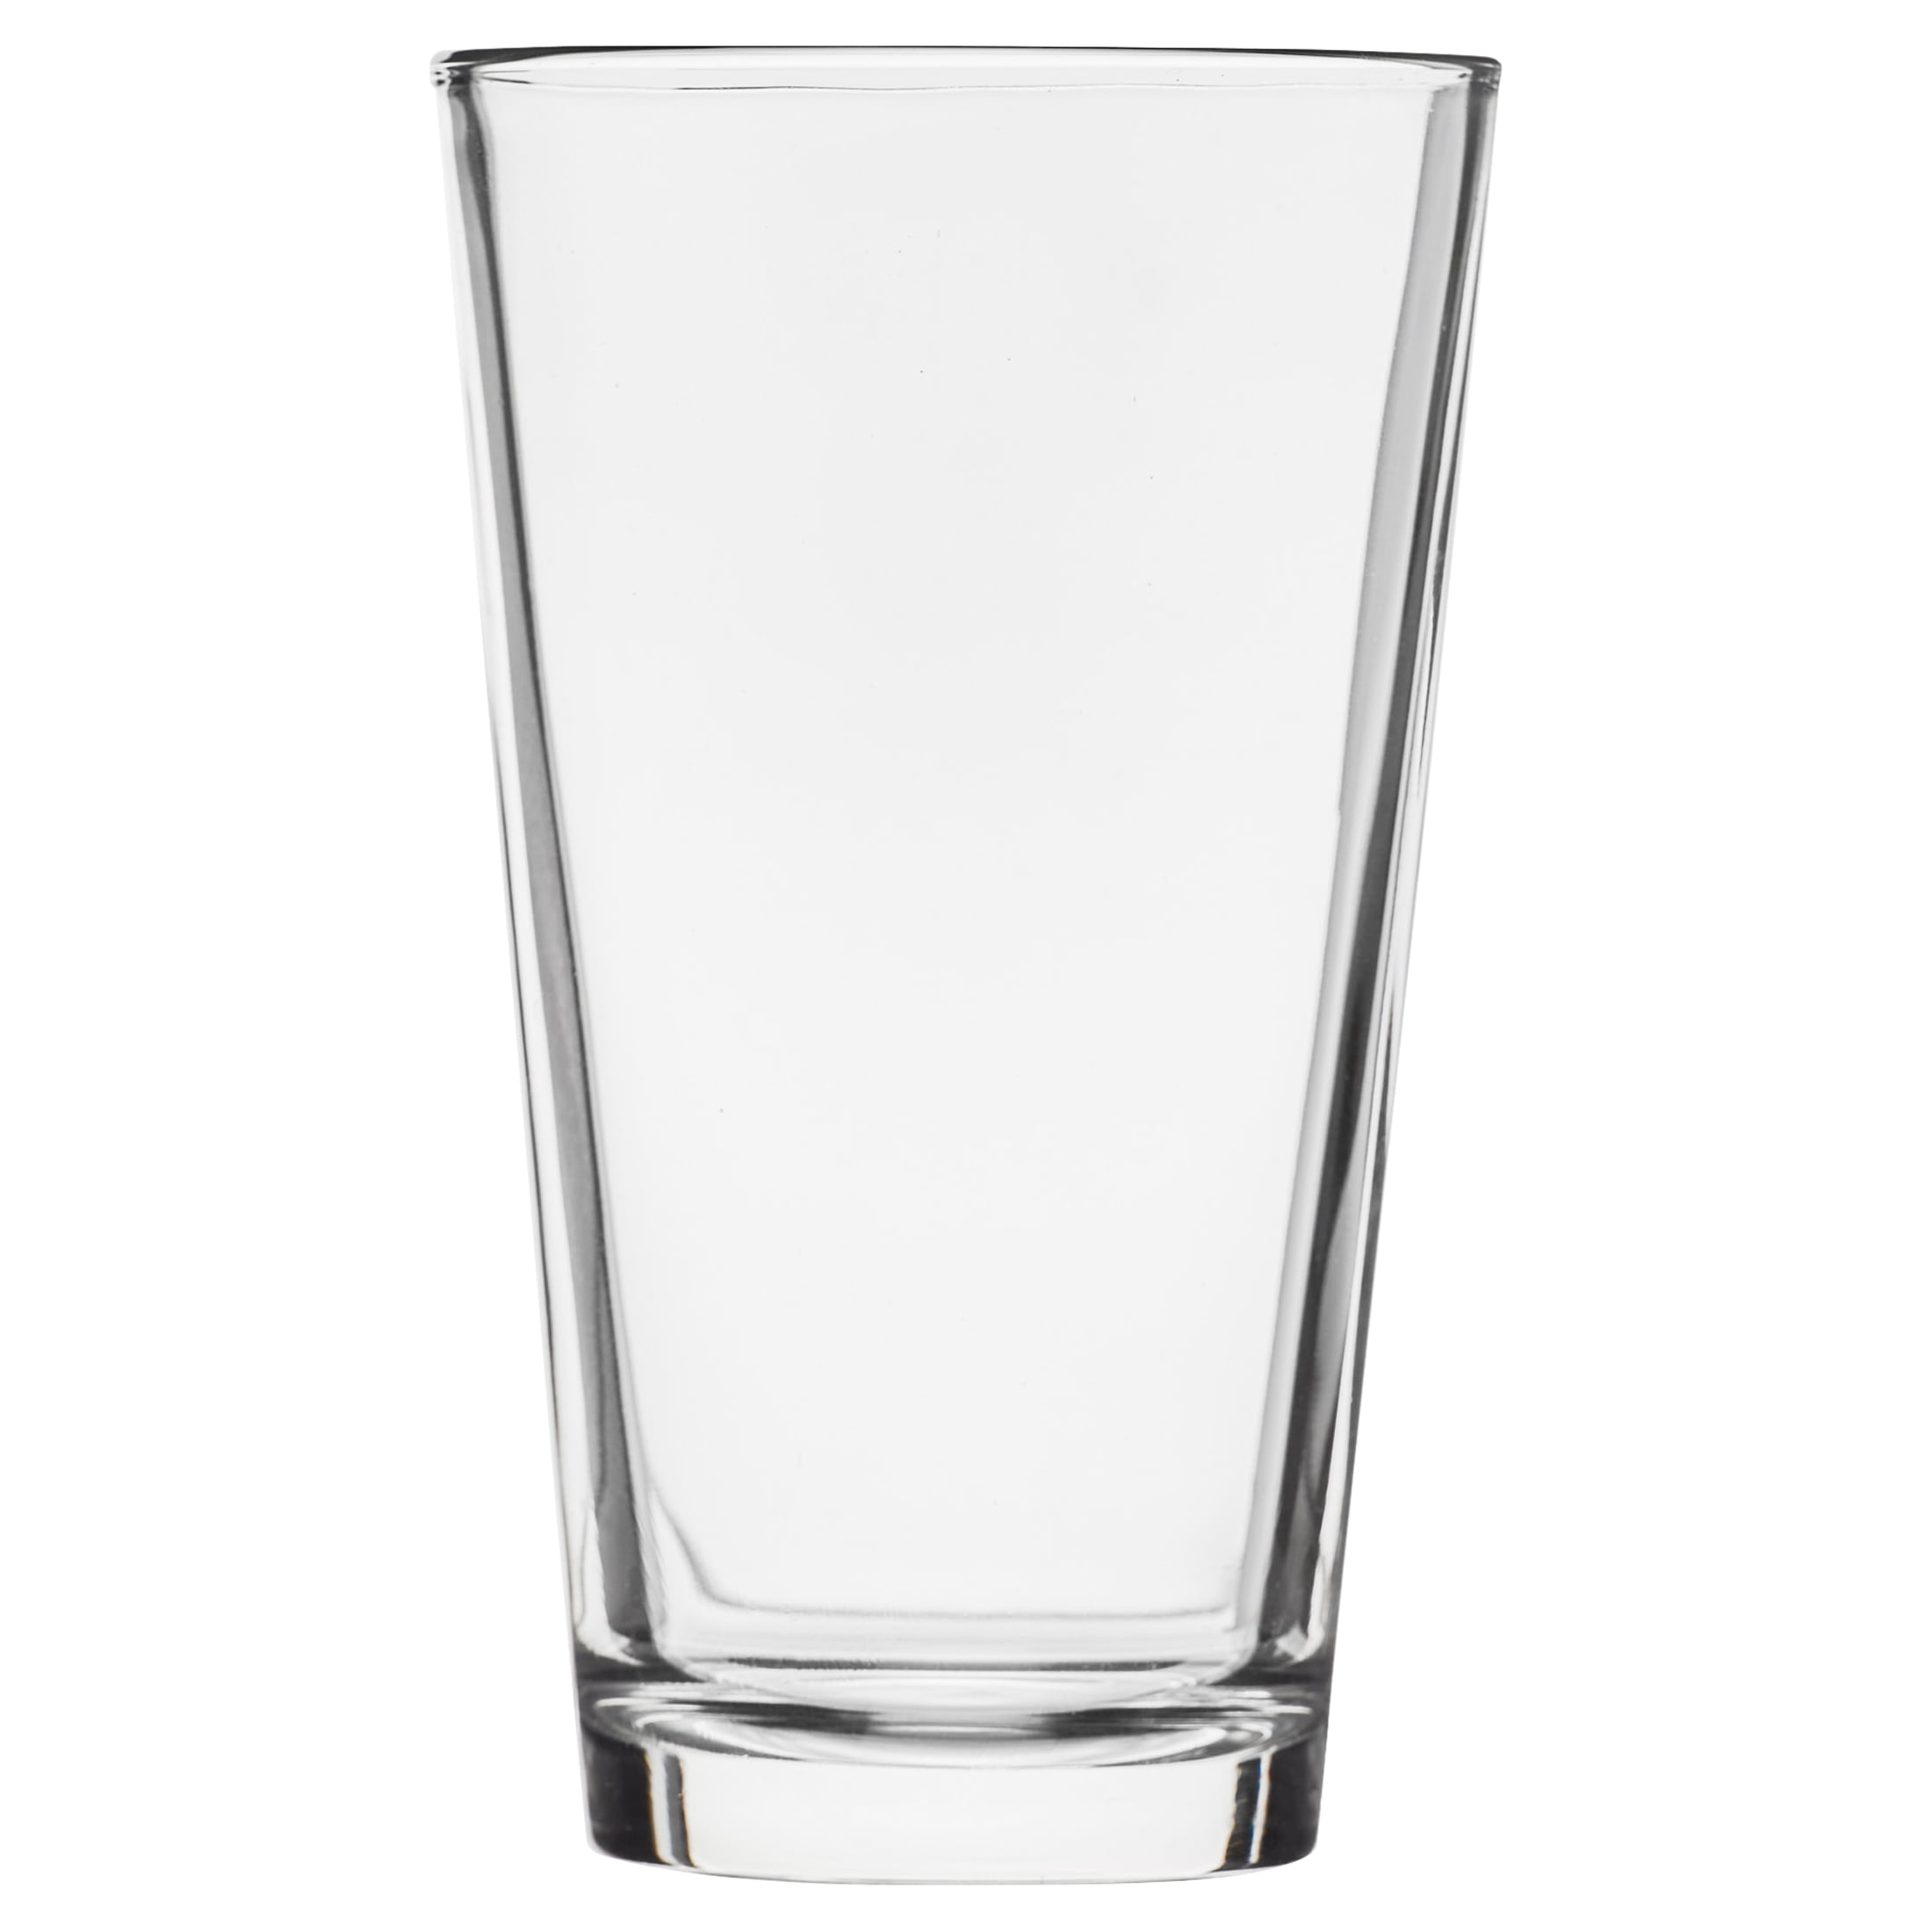 Mainstays 16-Piece Drinkware Glass Set, Size: One Size